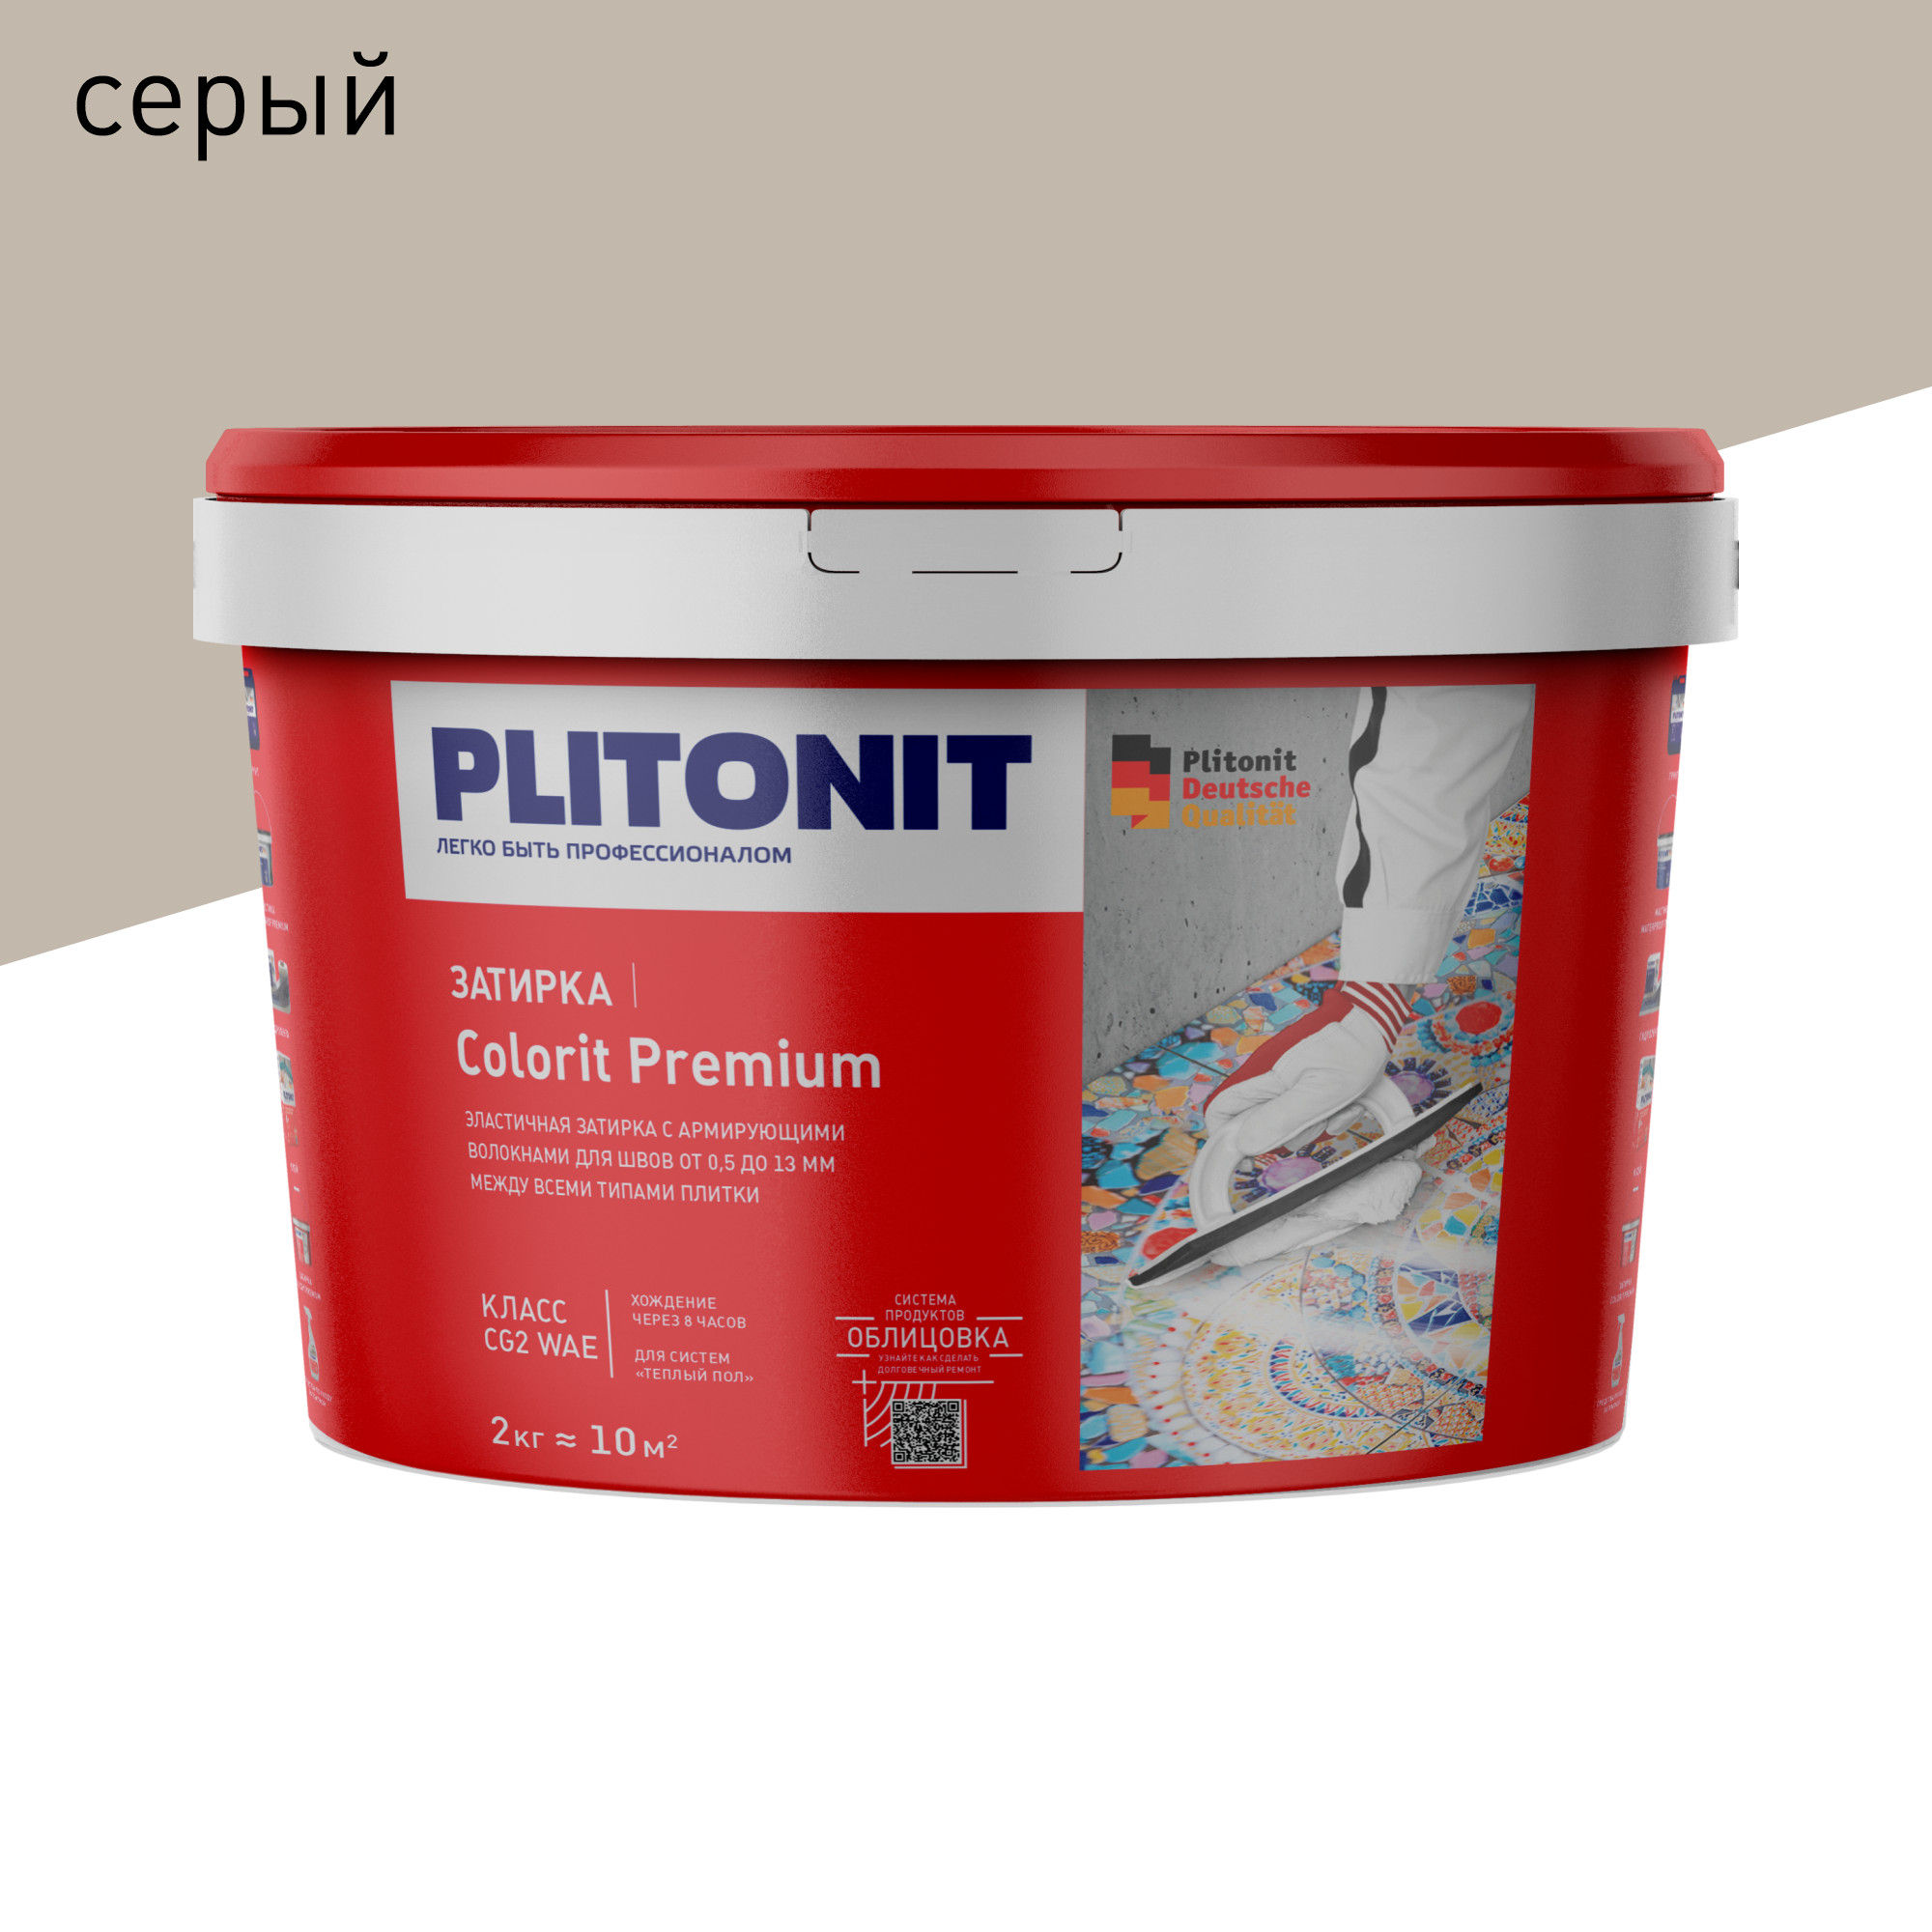 Затирка PLITONIT Colorit Premium серая 2 кг затирка plitonit colorit premium темно серая 2 кг